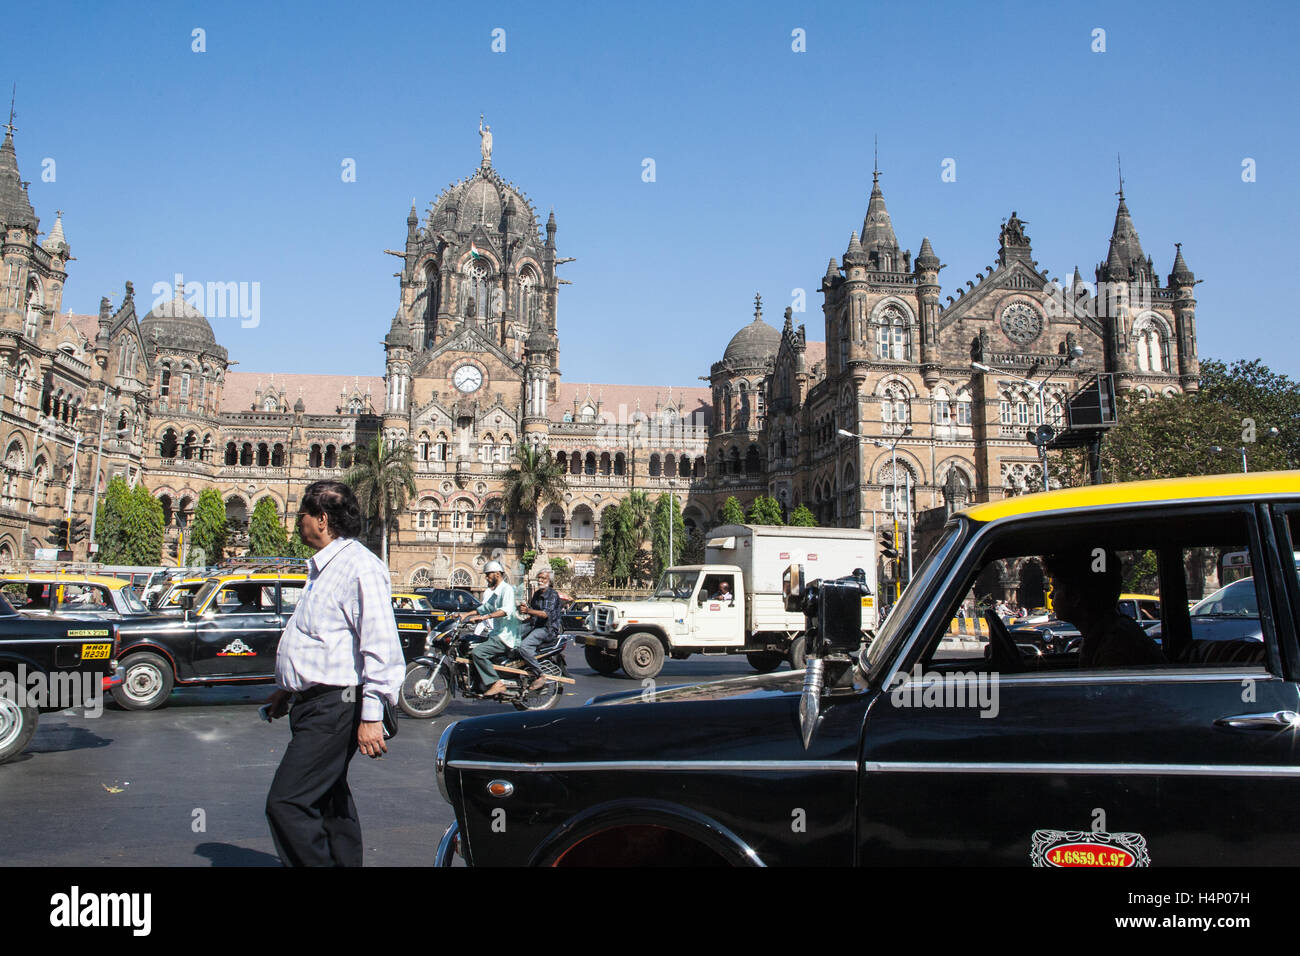 La gare Chhatrapati Shivaji, CST, alias Victoria Terminus, gare,VT,Mumbai Bombay,Maharashtra,Inde,France Asie. Banque D'Images